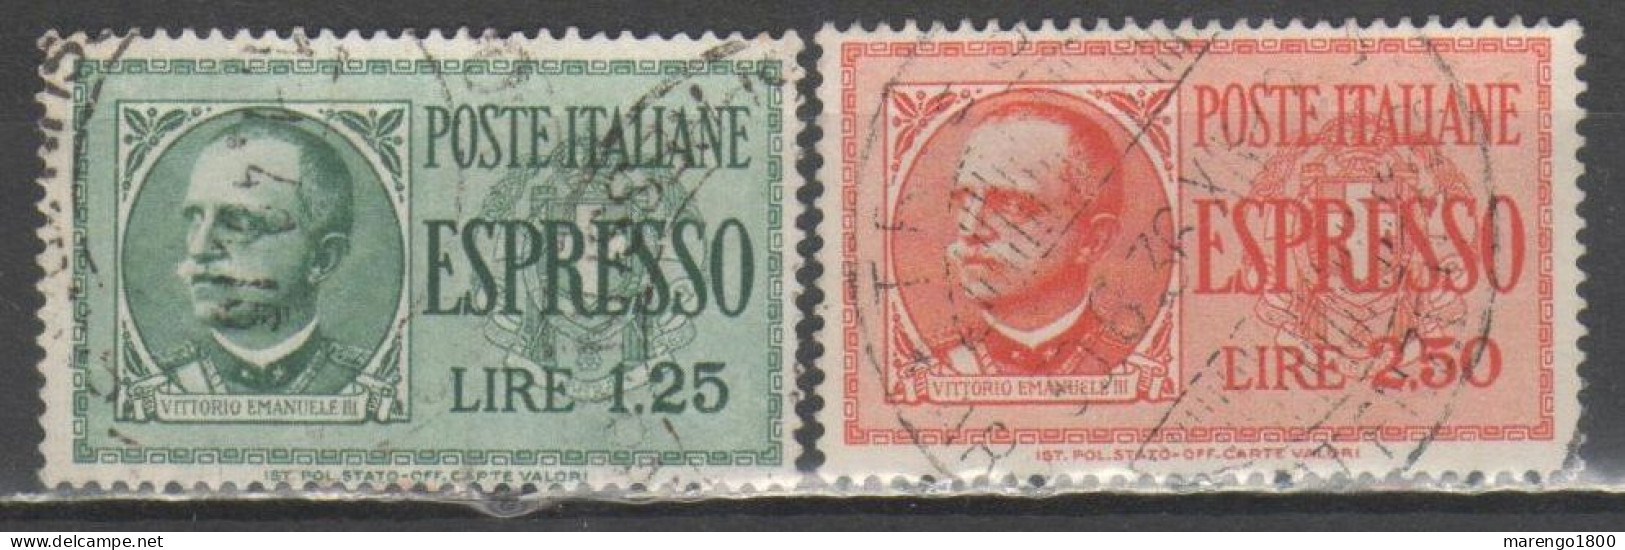 ITALIA 1932-33 - Espressi - Eilsendung (Eilpost)